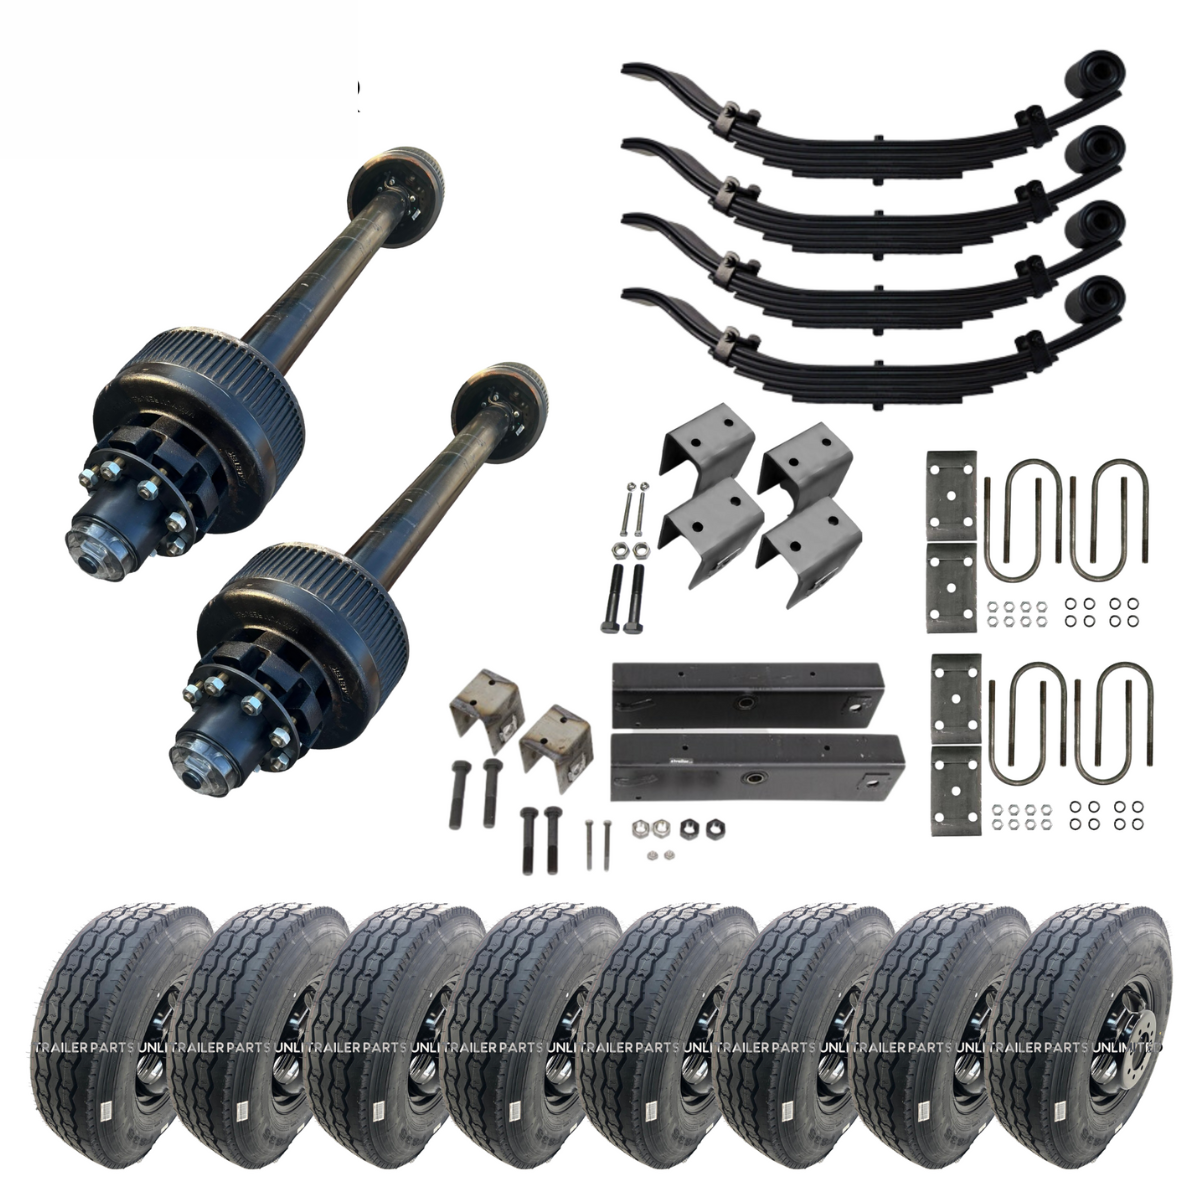 12,000 lb Carter Tandem Trailer Axle Tire Wheel Kit - 16" Black Duals